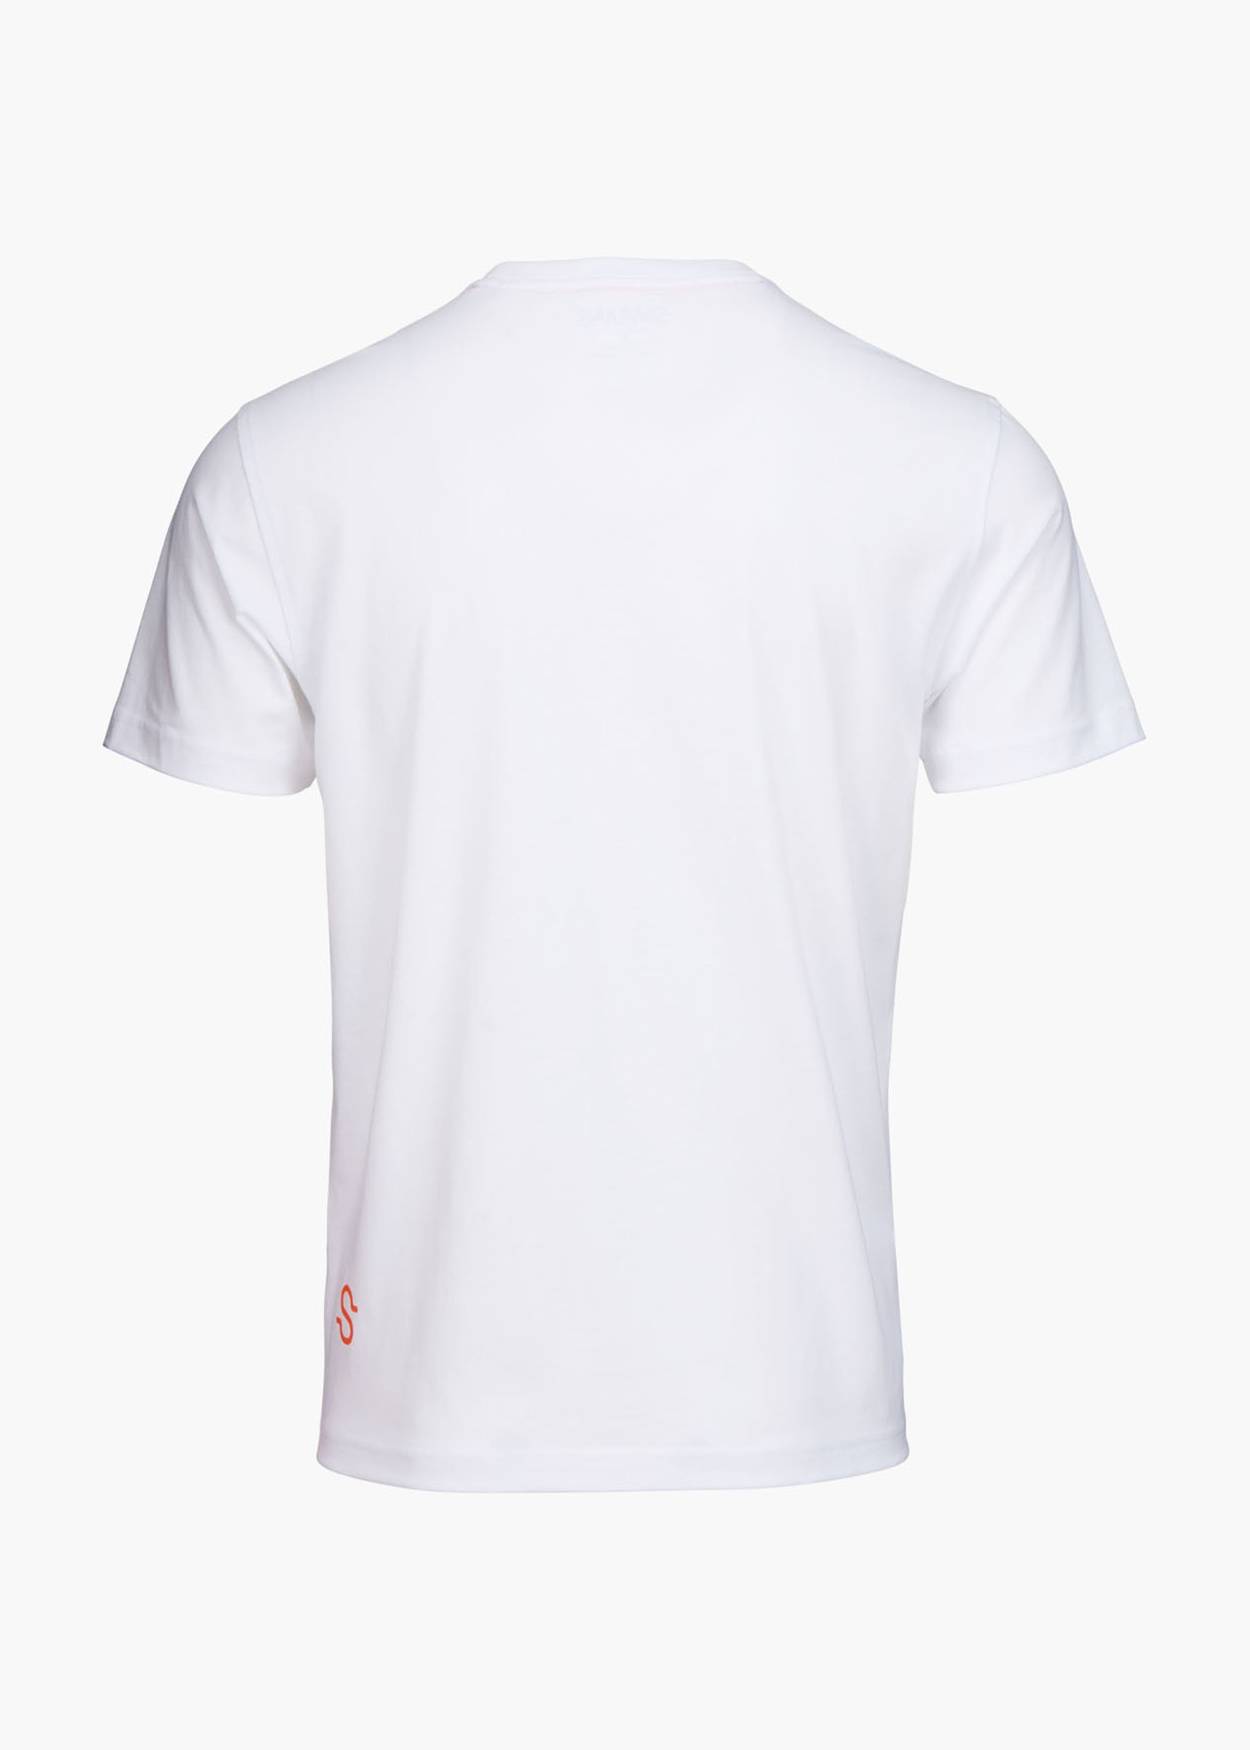 Ravello Graphic T Shirt